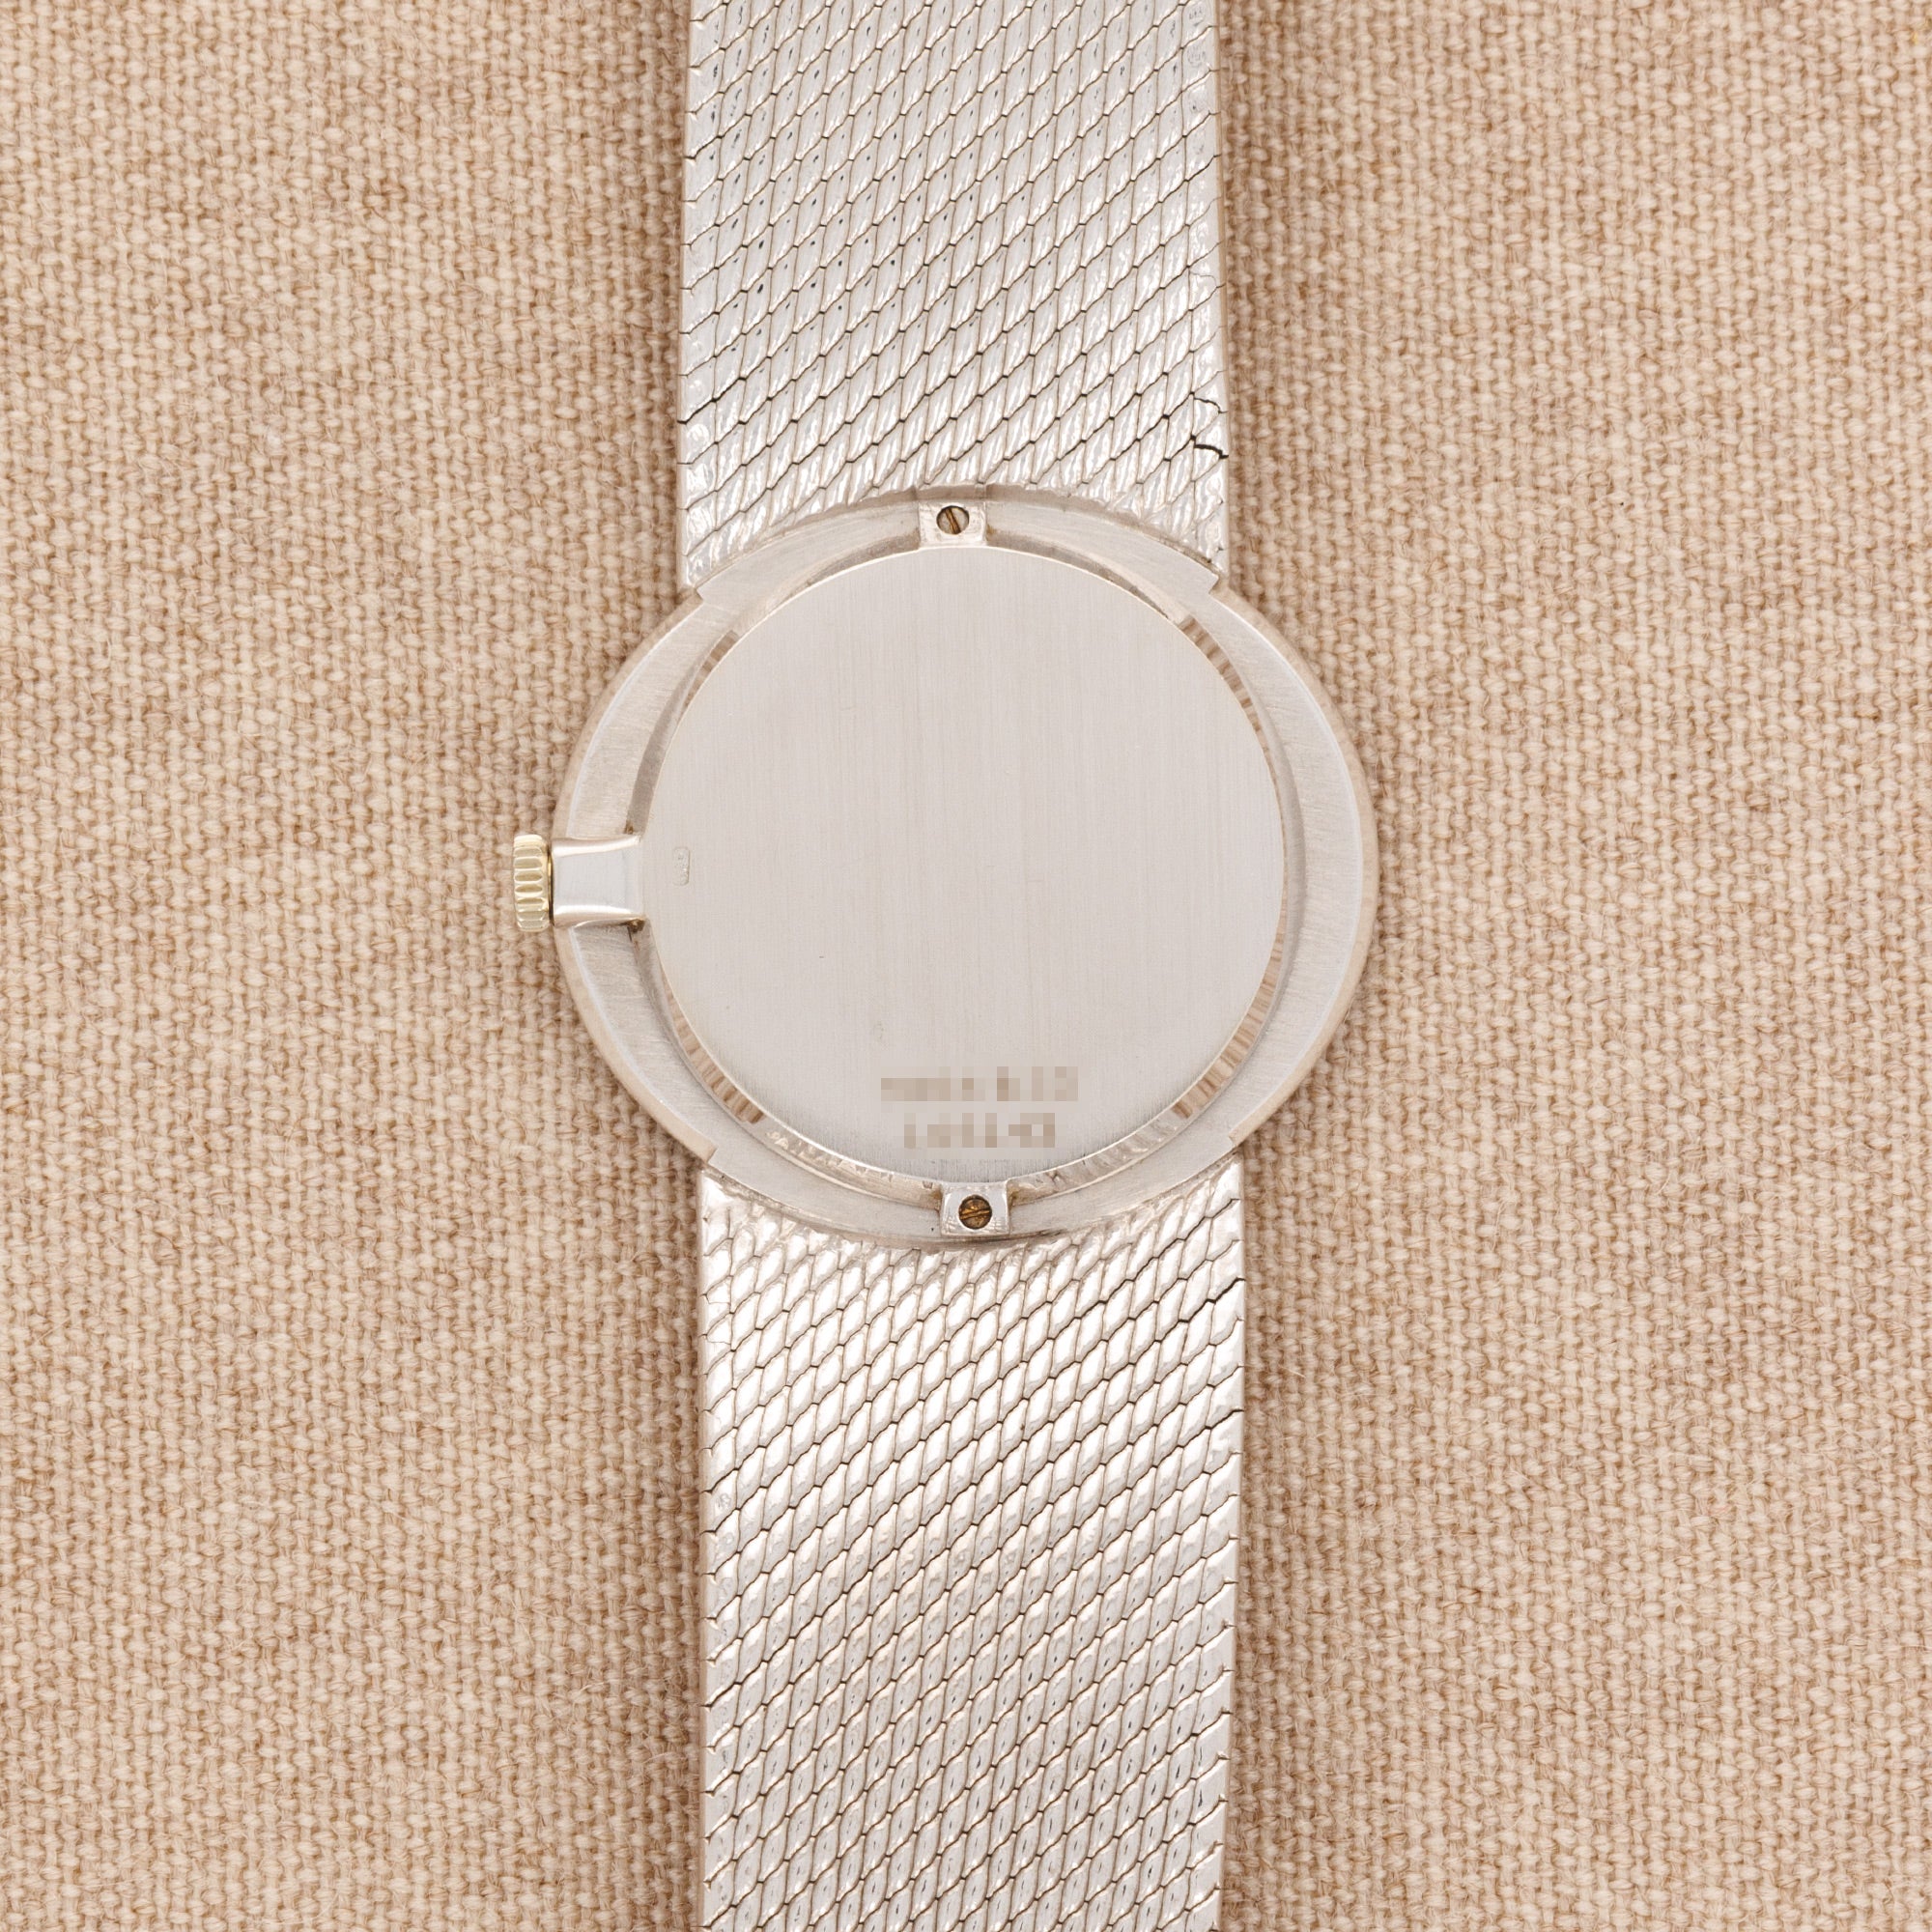 Piaget - Piaget White Gold Rubelite Diamond Watch Ref. 9804 - The Keystone Watches